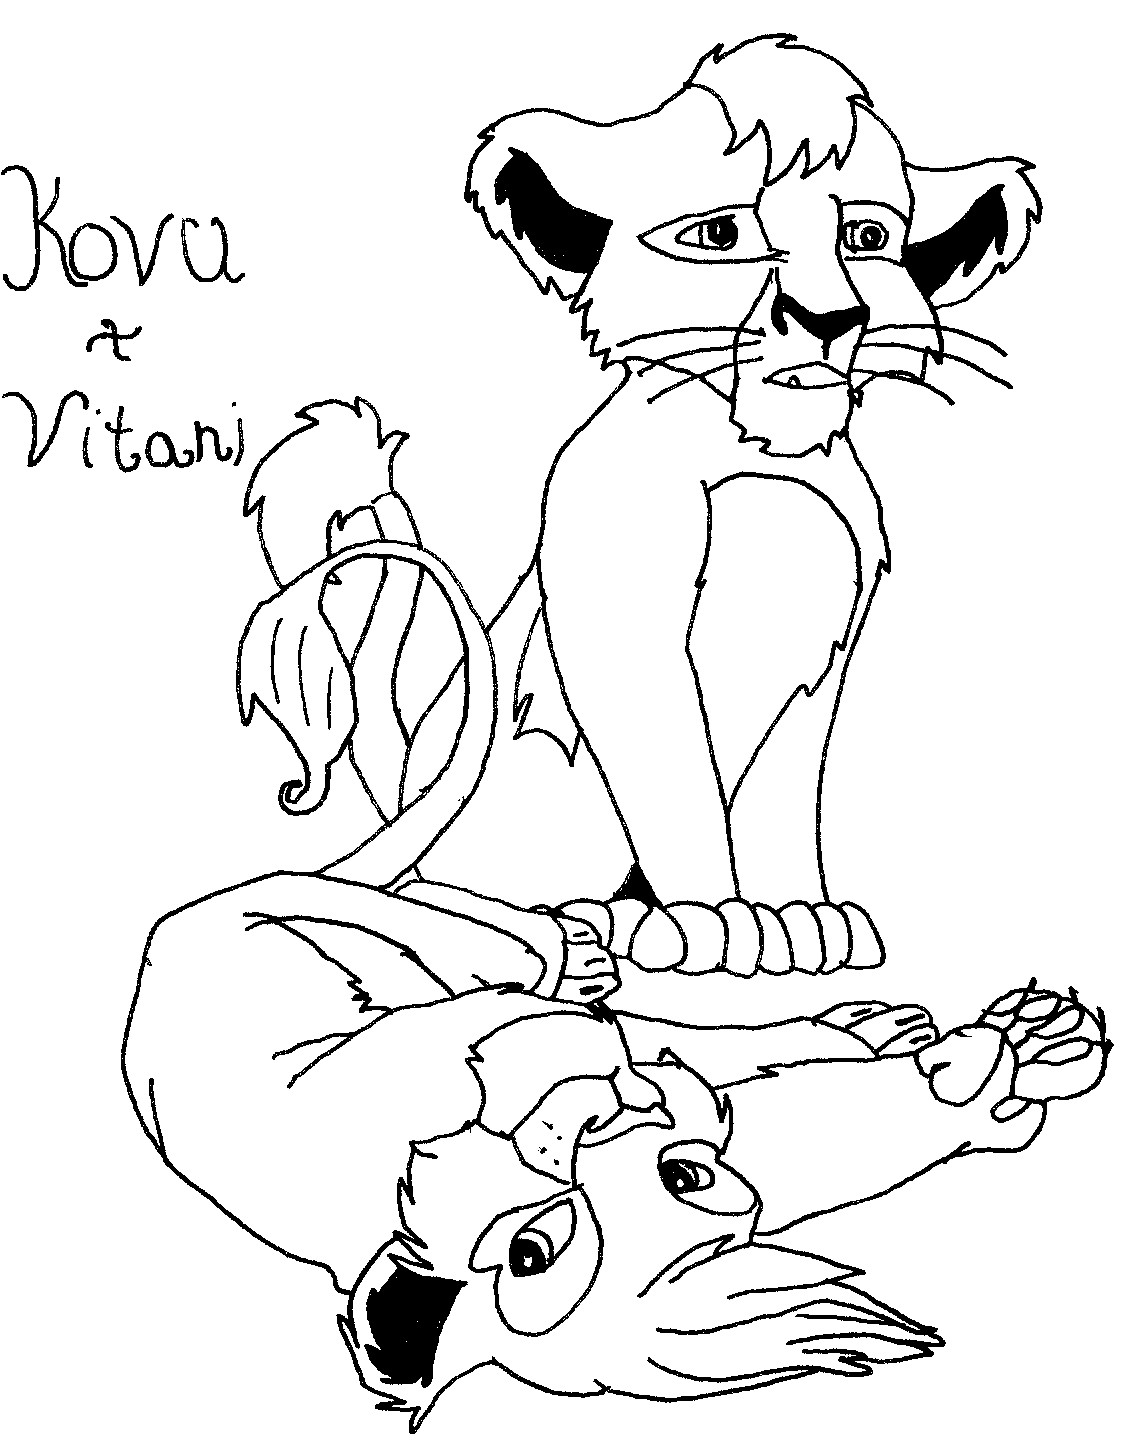 kovu and vitani by sparx